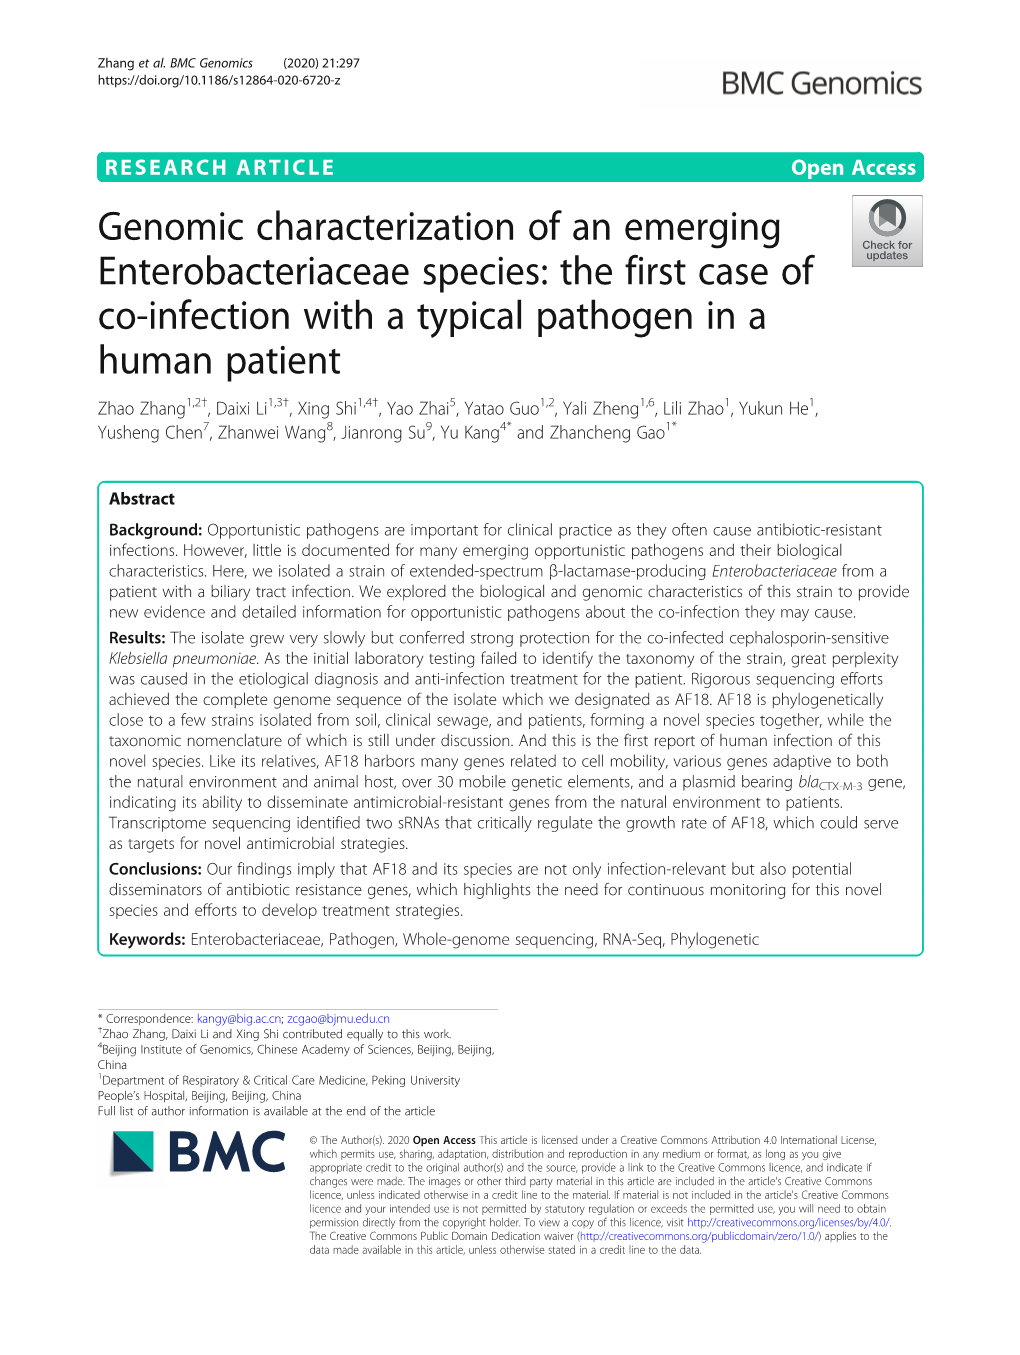 Genomic Characterization of an Emerging